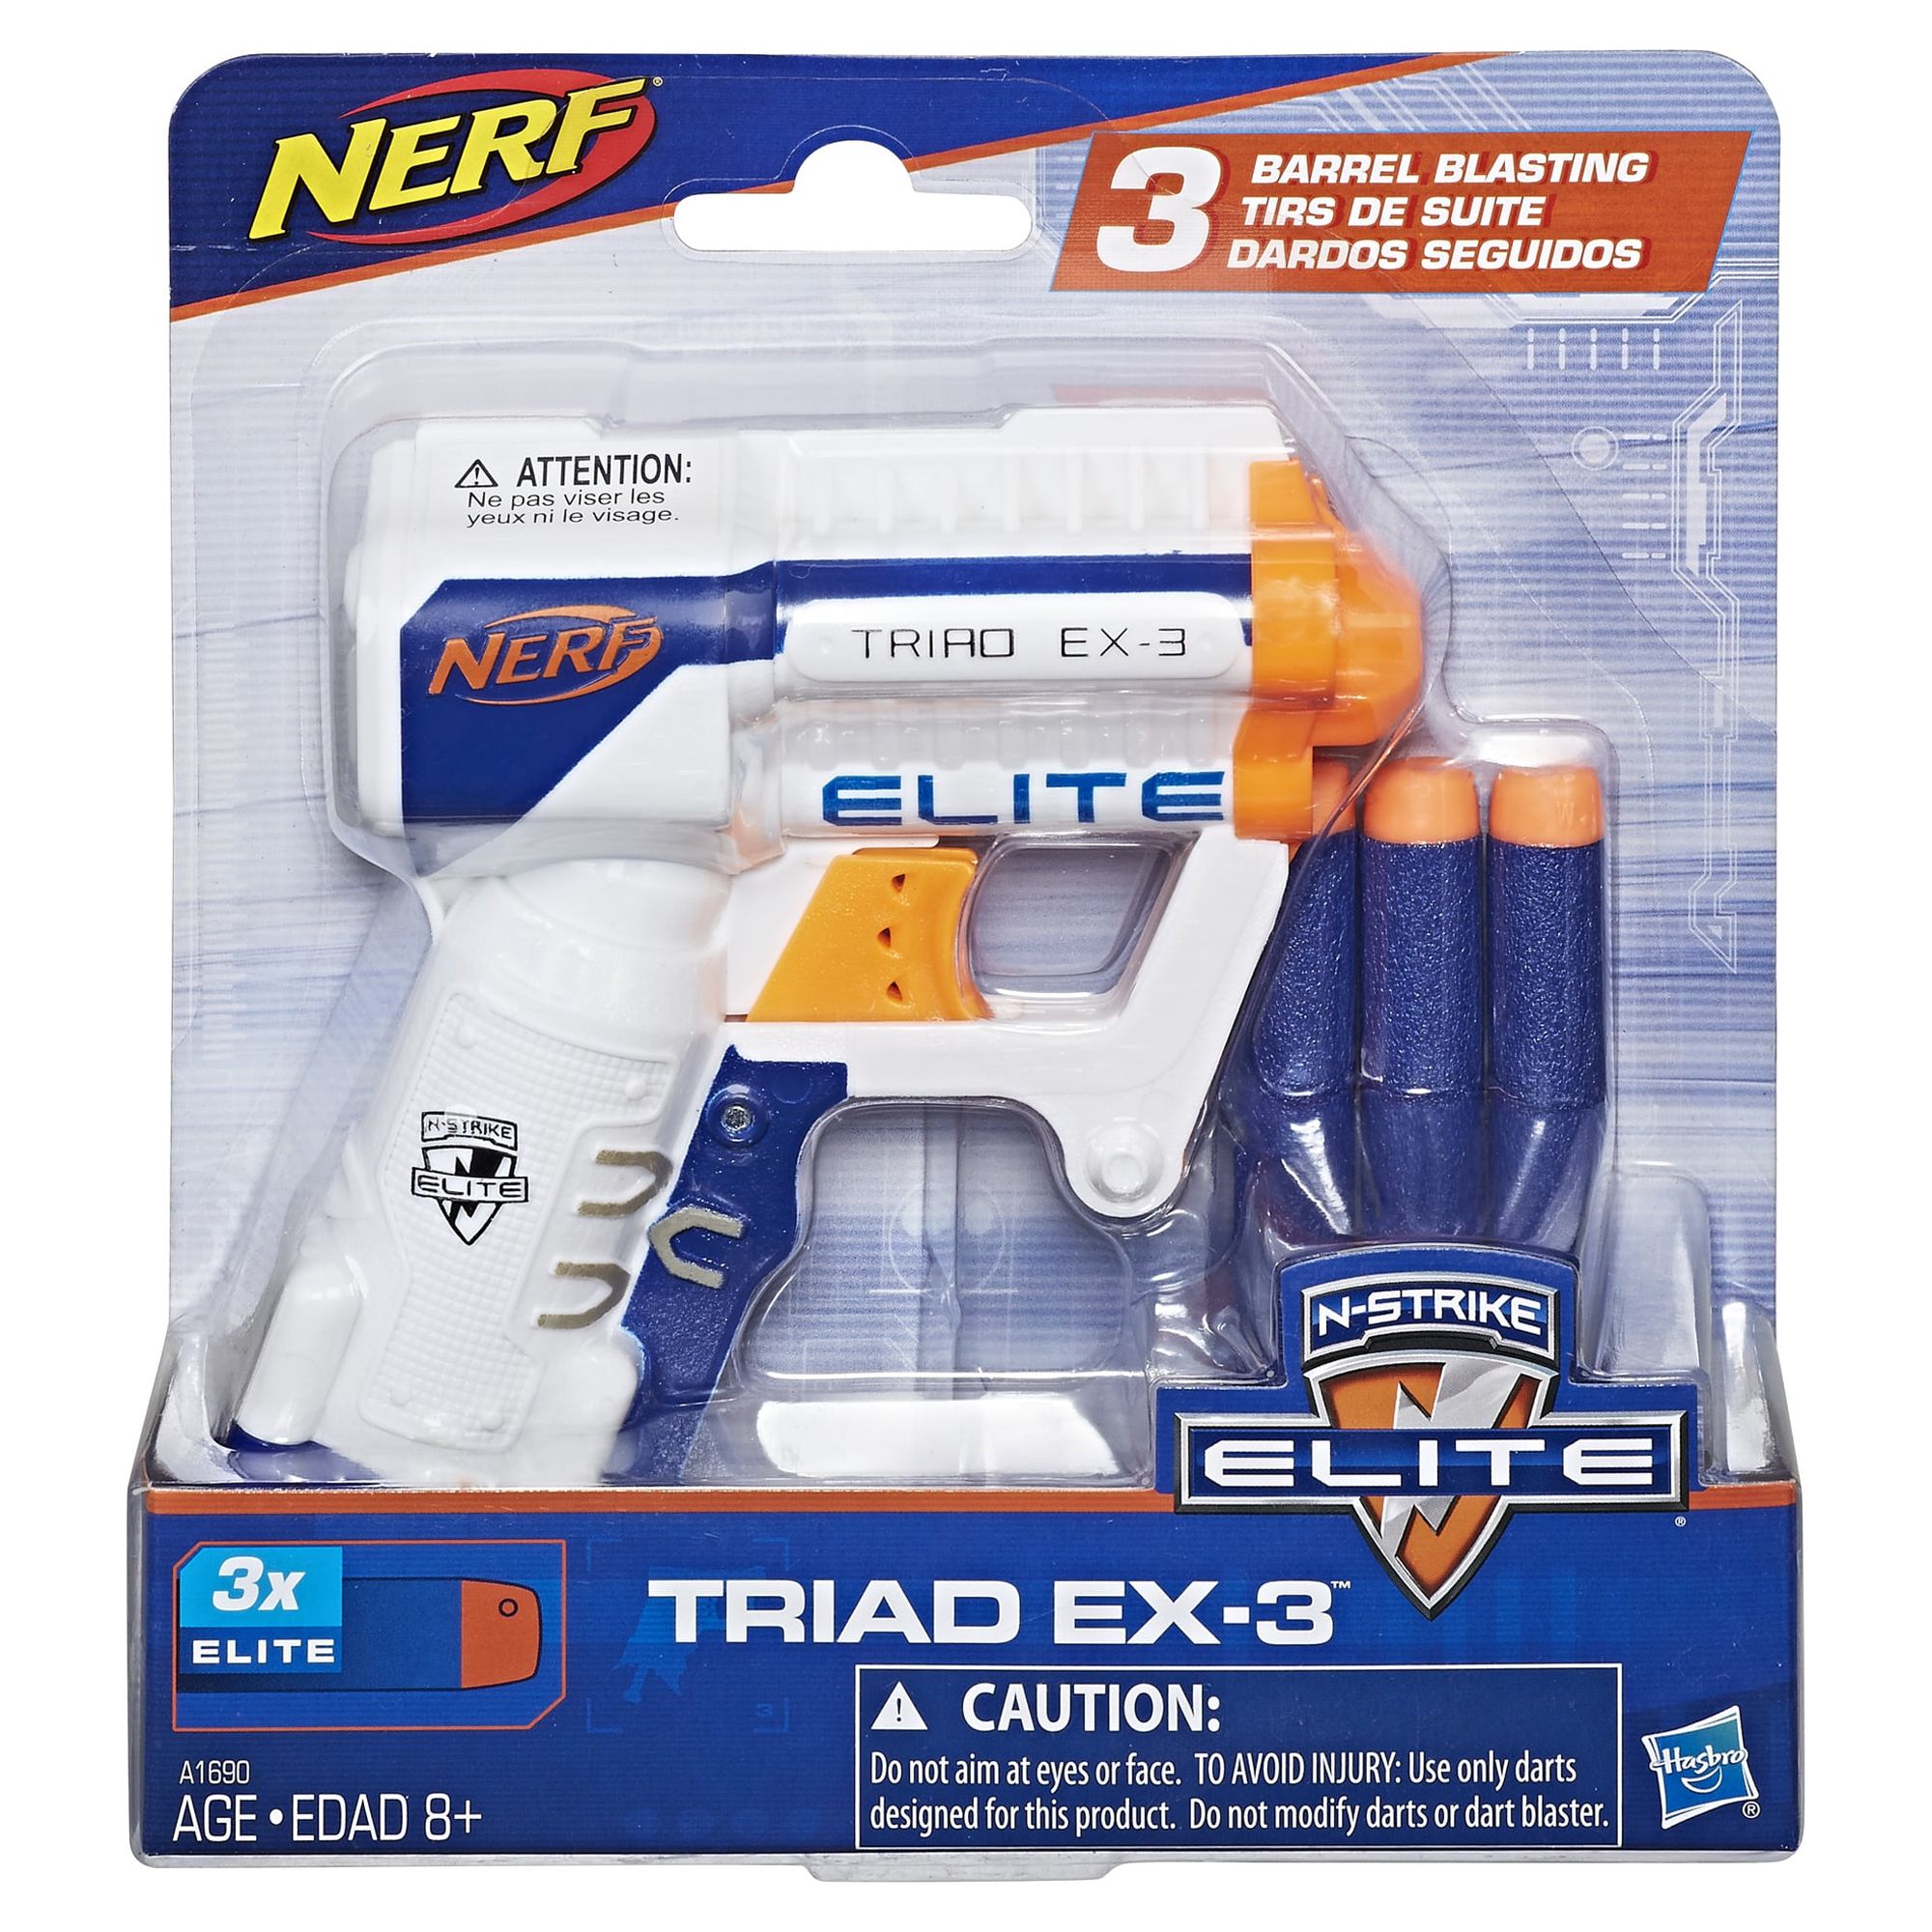 Nerf N-Strike Elite Triad EX-3 Blaster with 3 Nerf Elite Darts - image 2 of 2